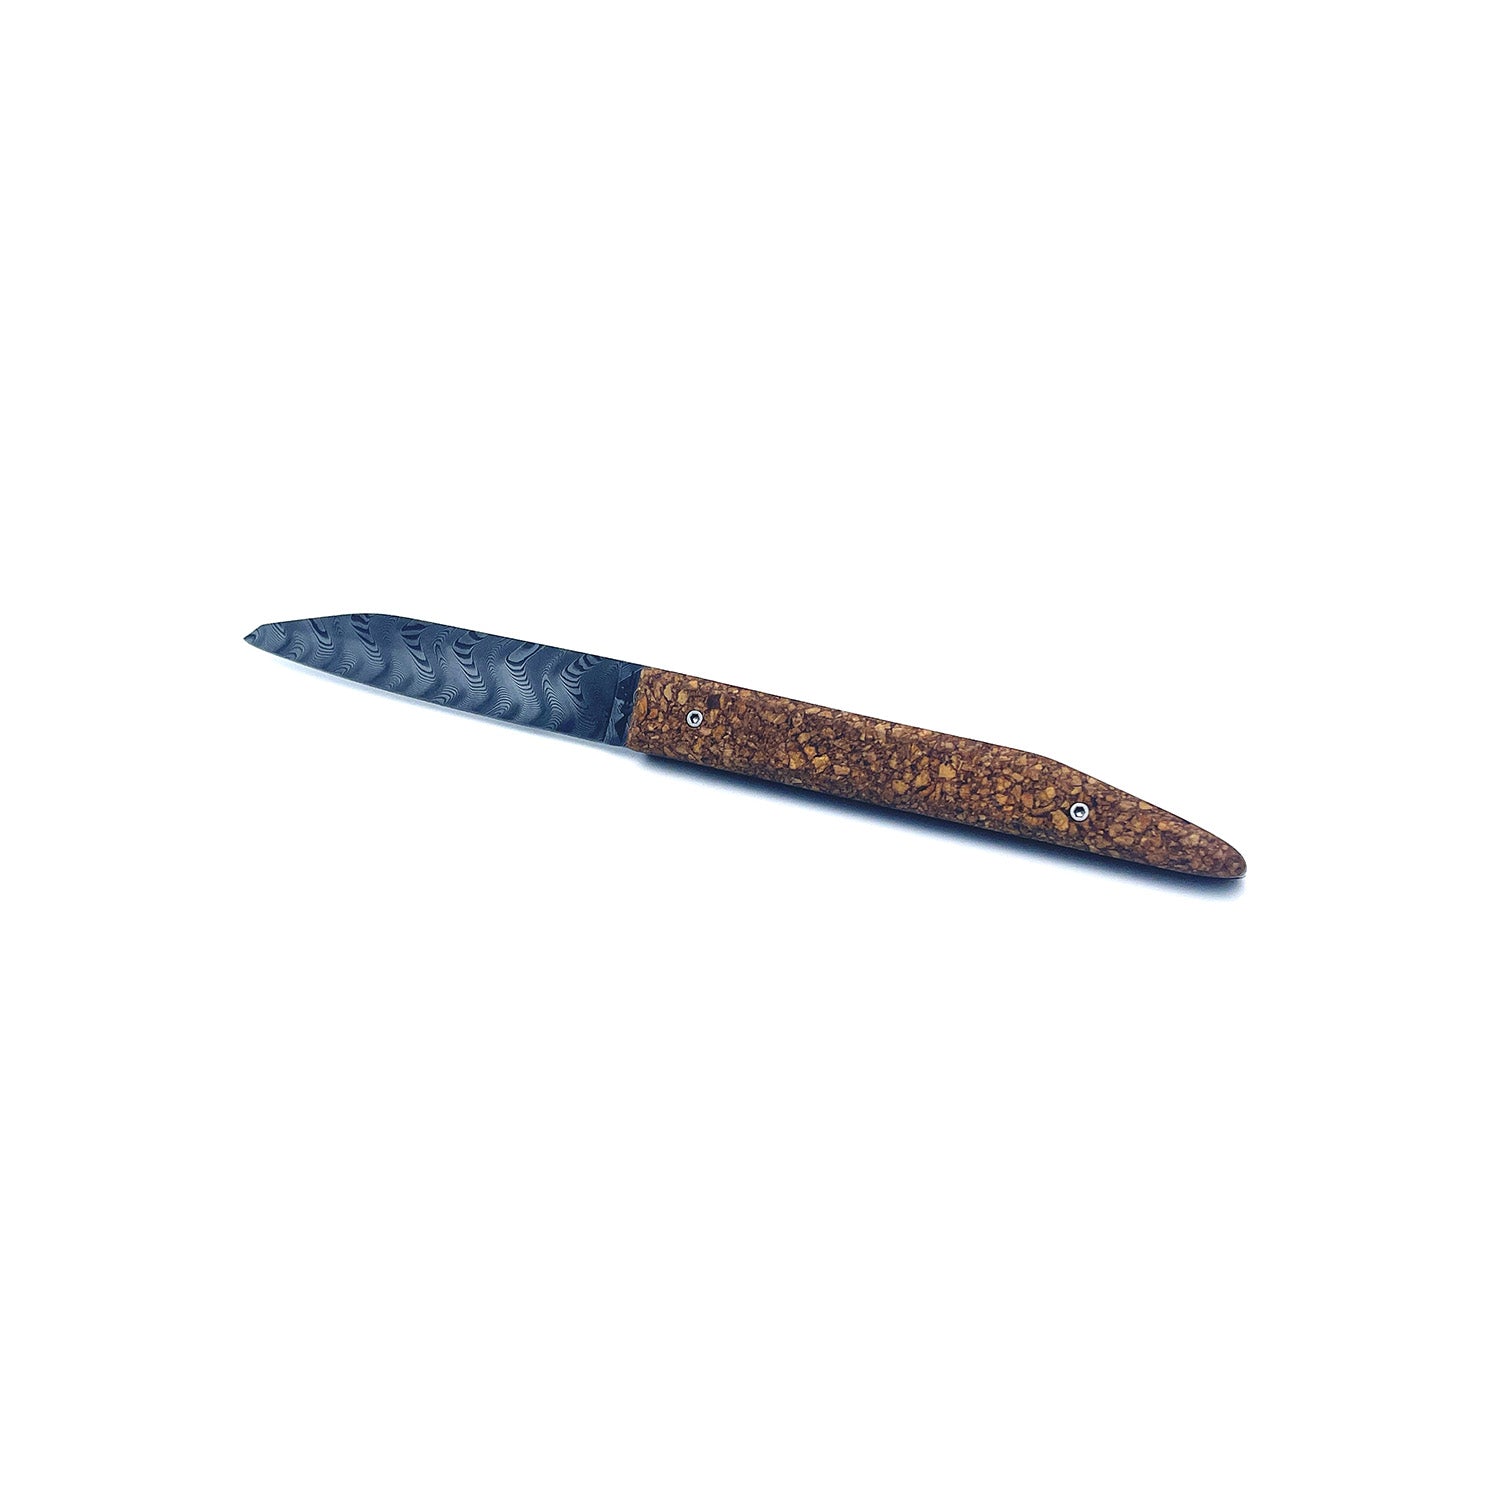 Knife with cork handle and Damasteel blade